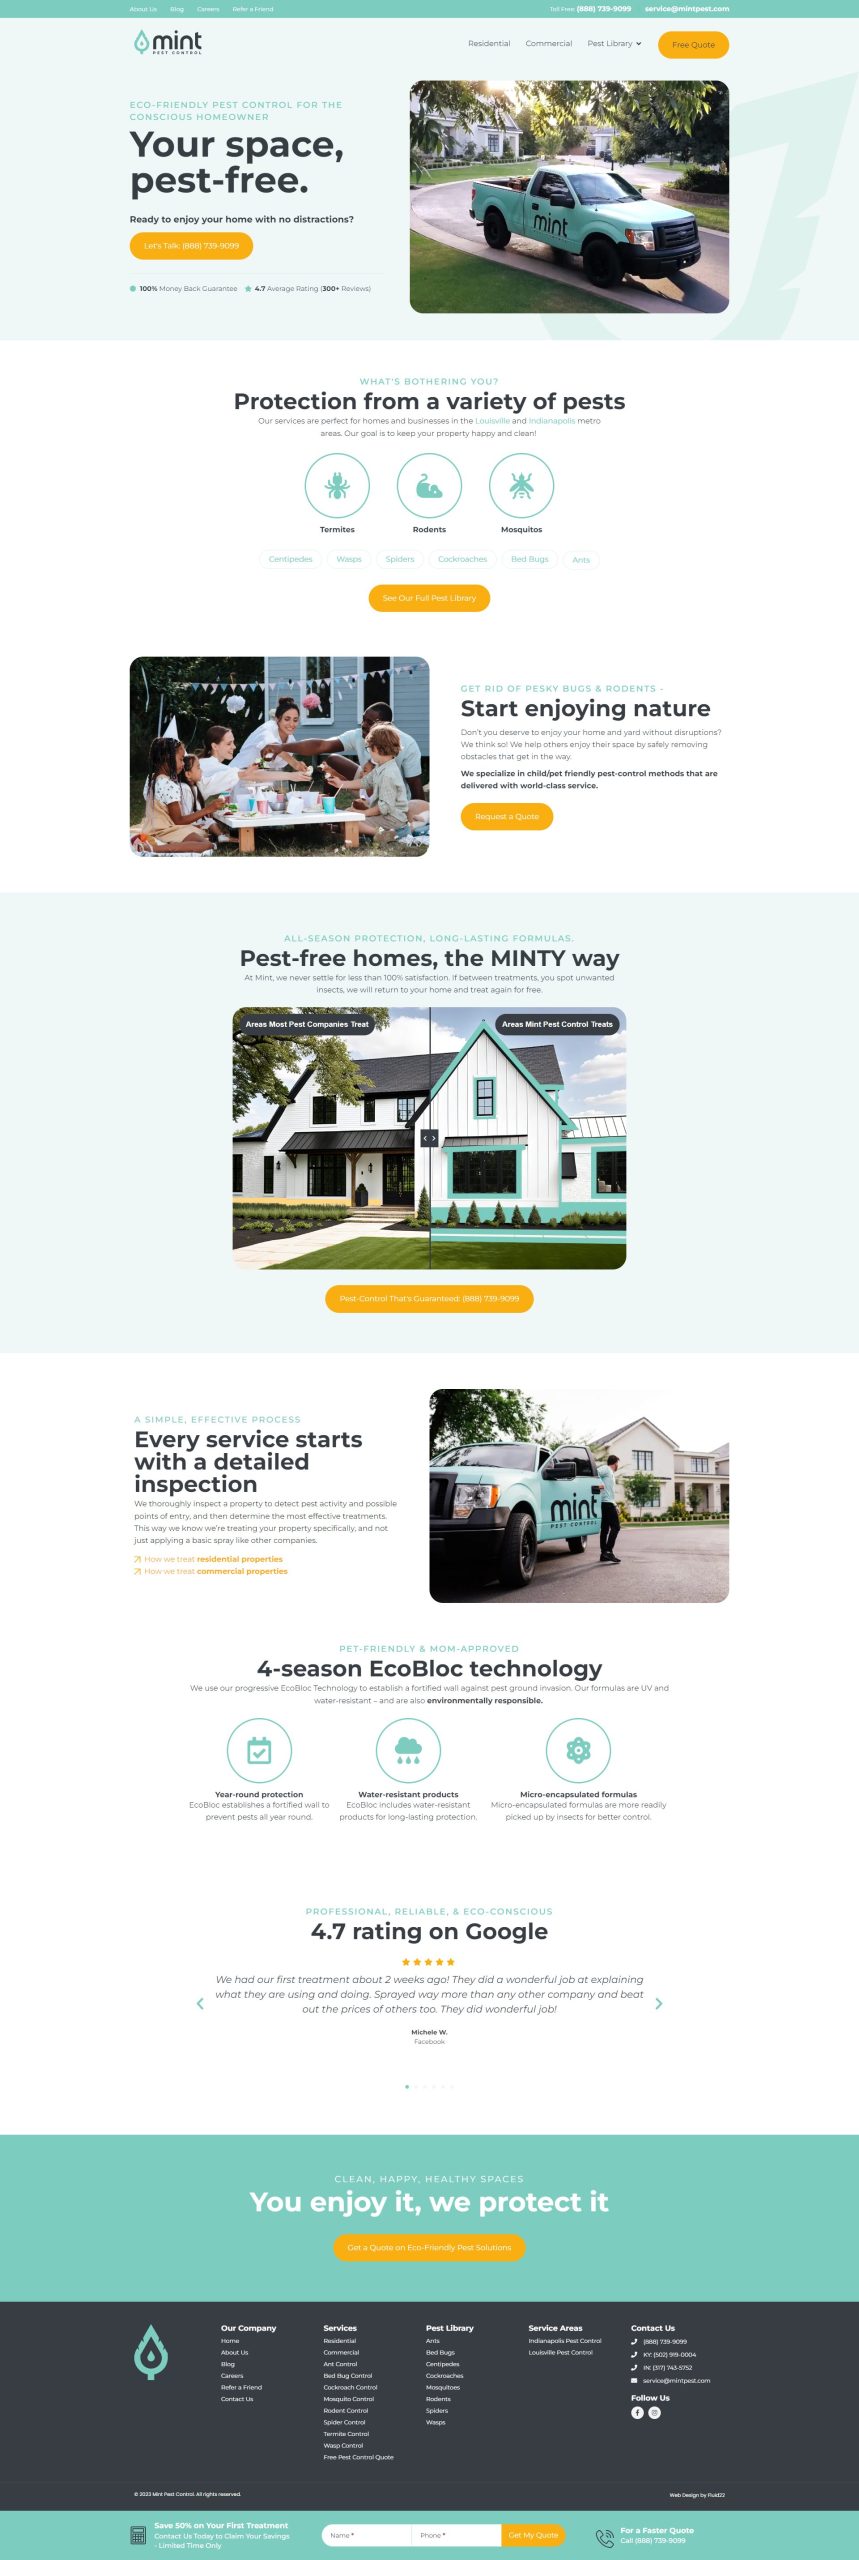 Mint Pest Control website design capture